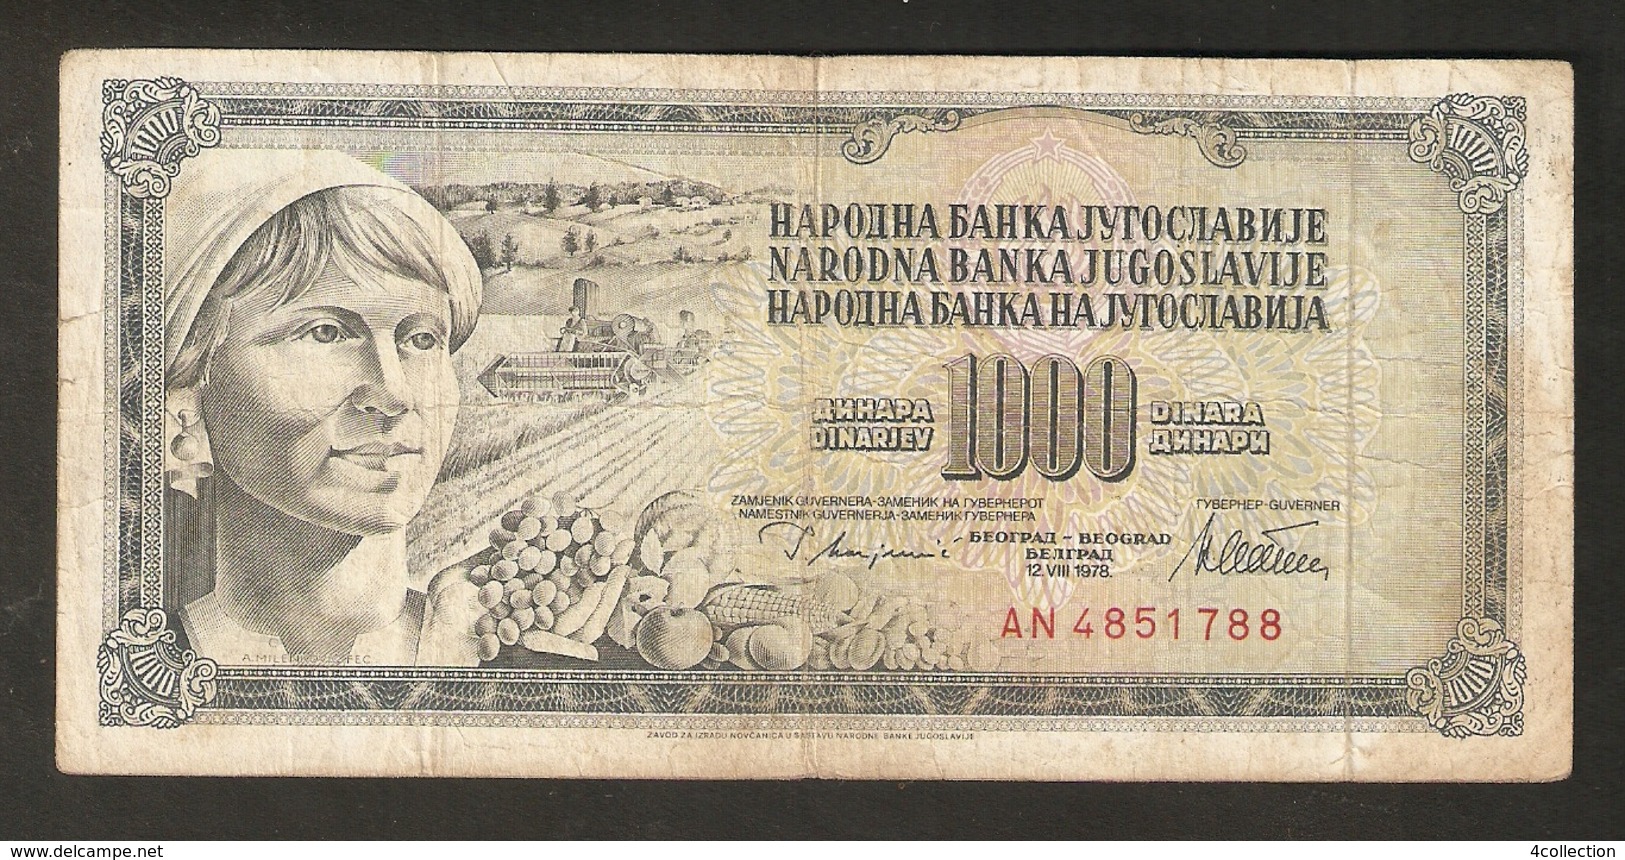 T. Yugoslavia Jugoslavije 1000 Dinara Dinarjev Beograd 12 VIII 1978 # AN 4851788 - Joegoslavië